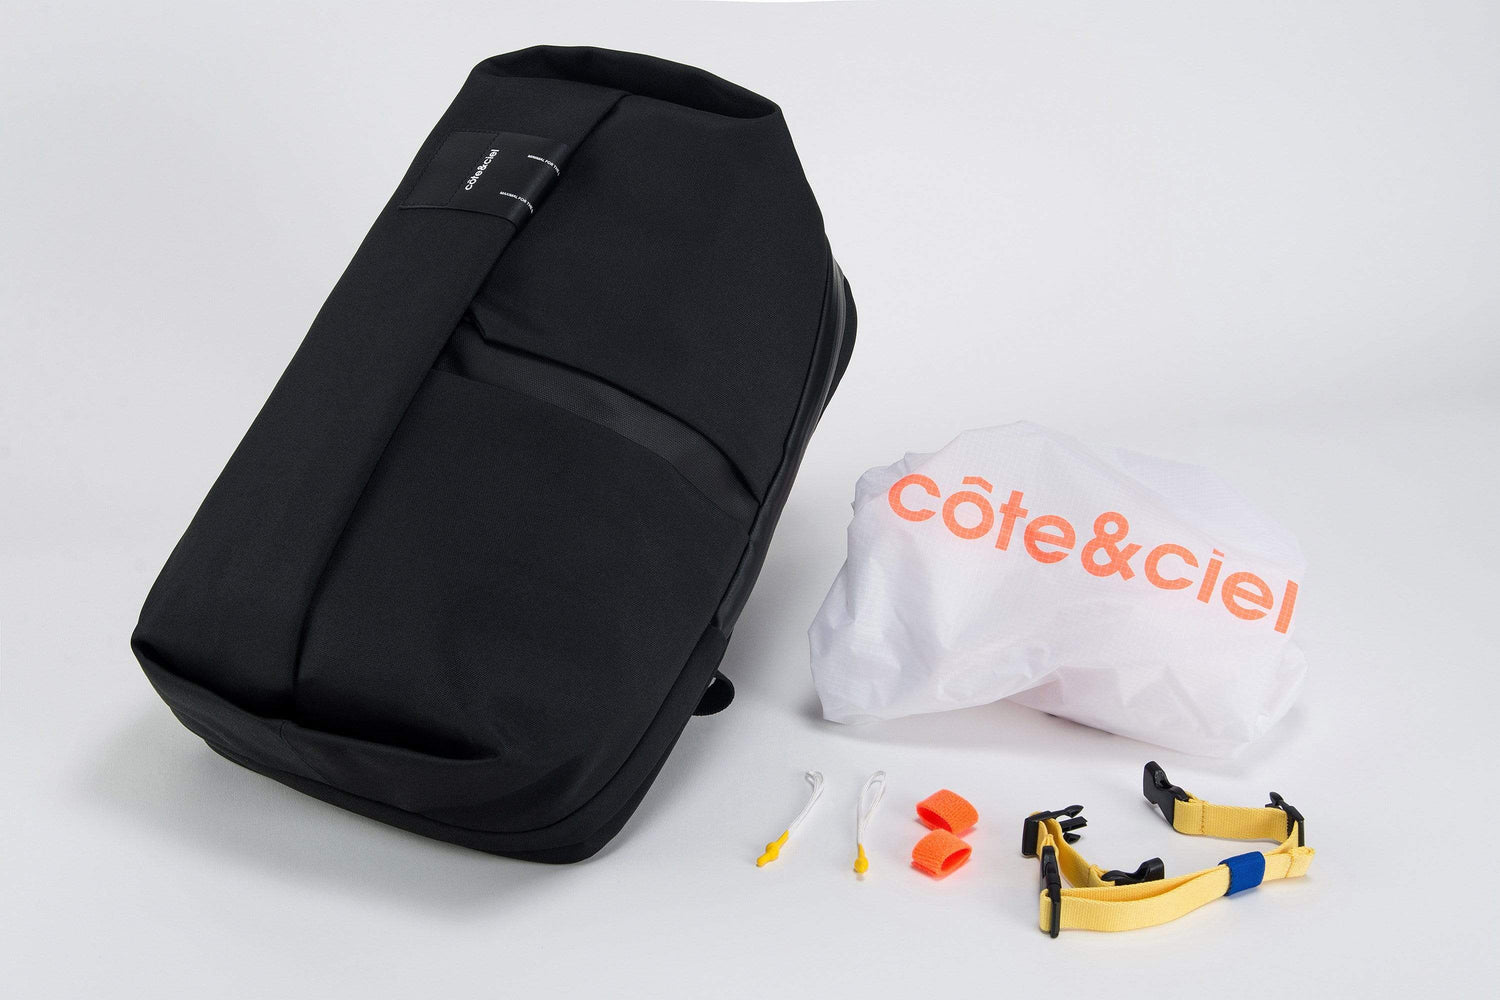 coteetciel Backpack Sormonne POPaccent Black côte&ciel EU 28902